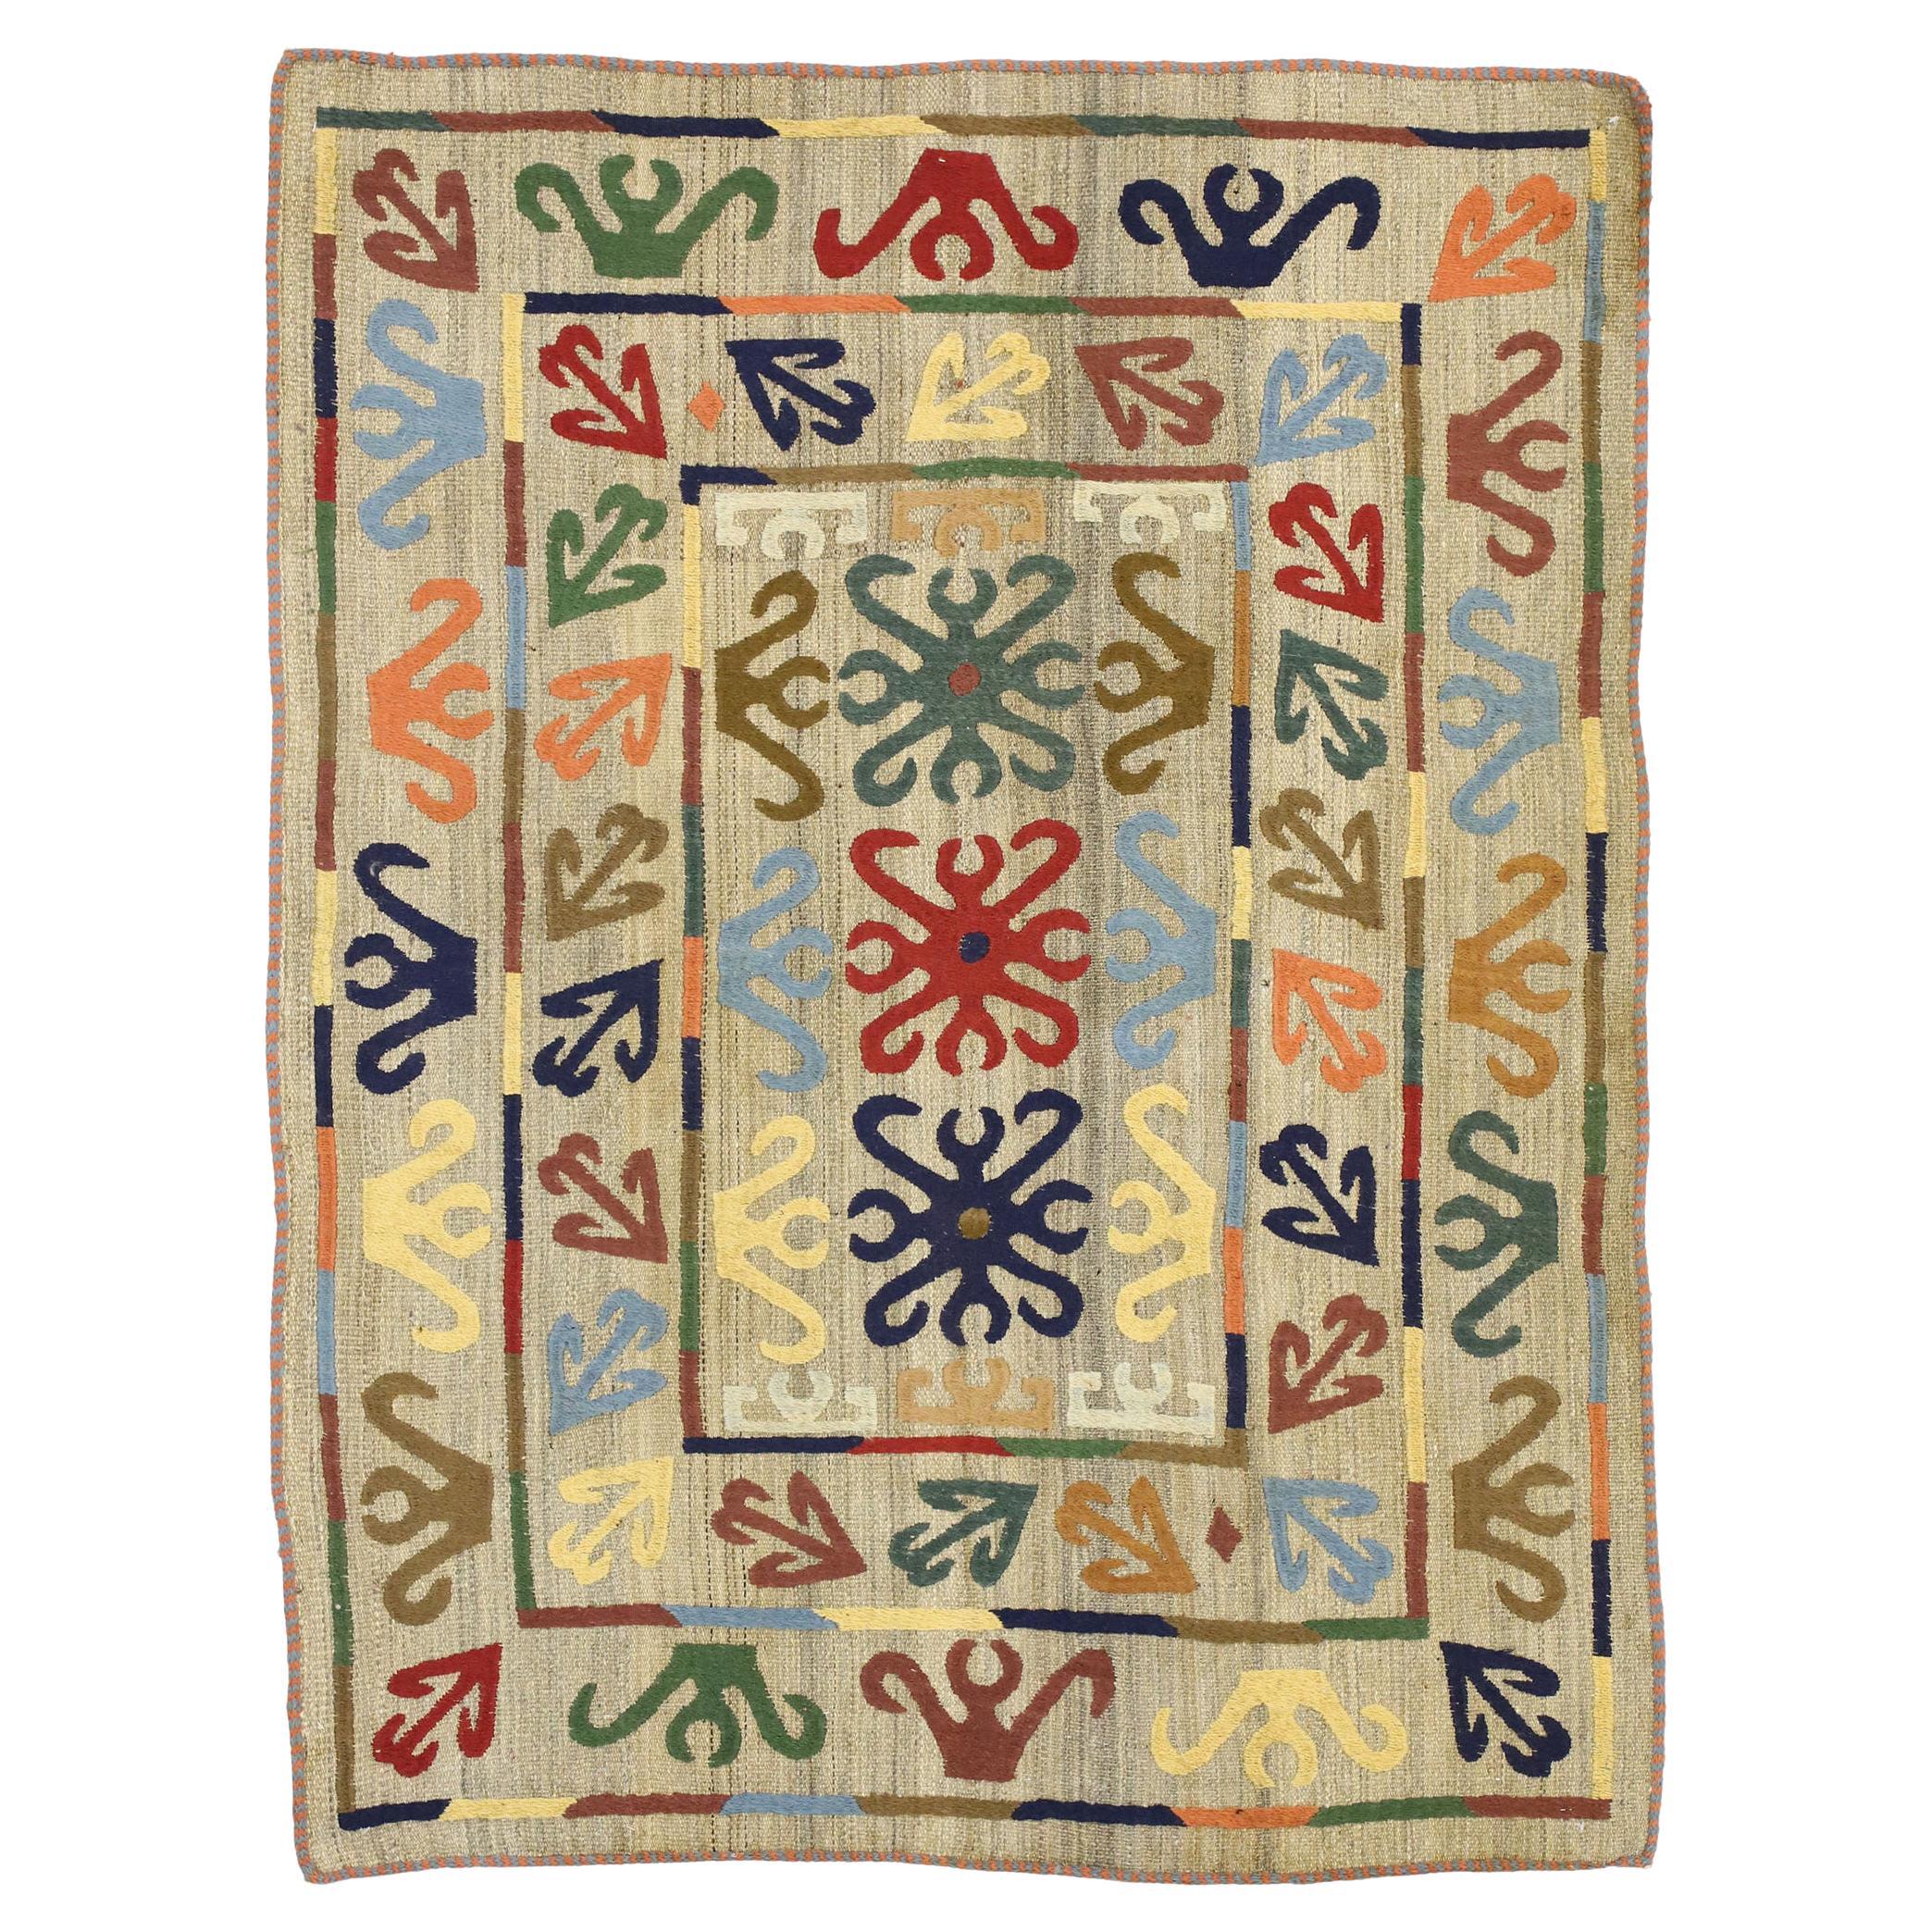 Vintage Afghan Embroidered Suzani Kilim Rug with Modern Tribal Style